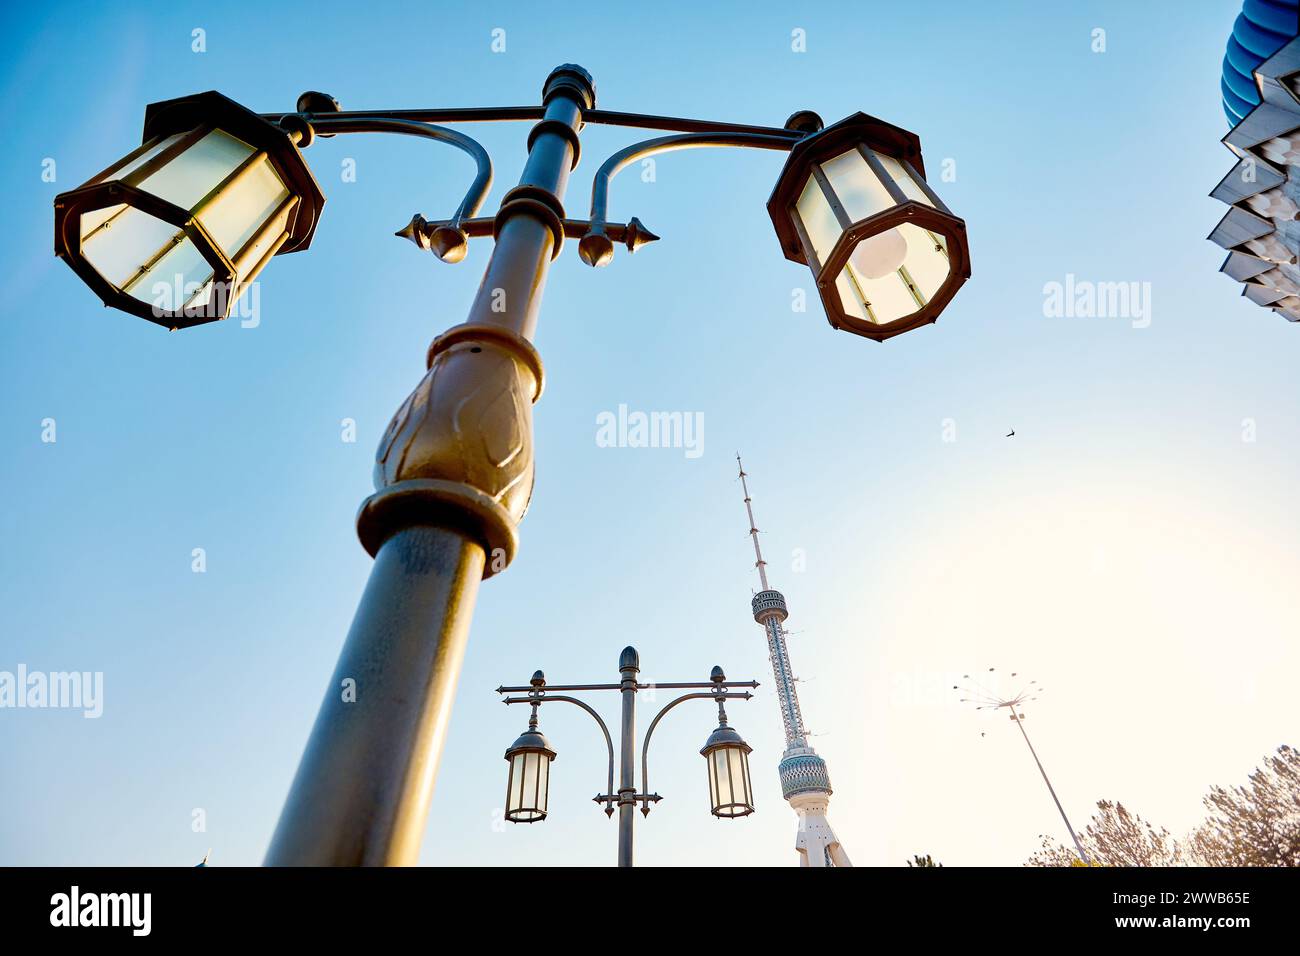 Tashkent TV Tower Toshkent Teleminorasi e lampione contro il cielo blu in Uzbekistan Foto Stock